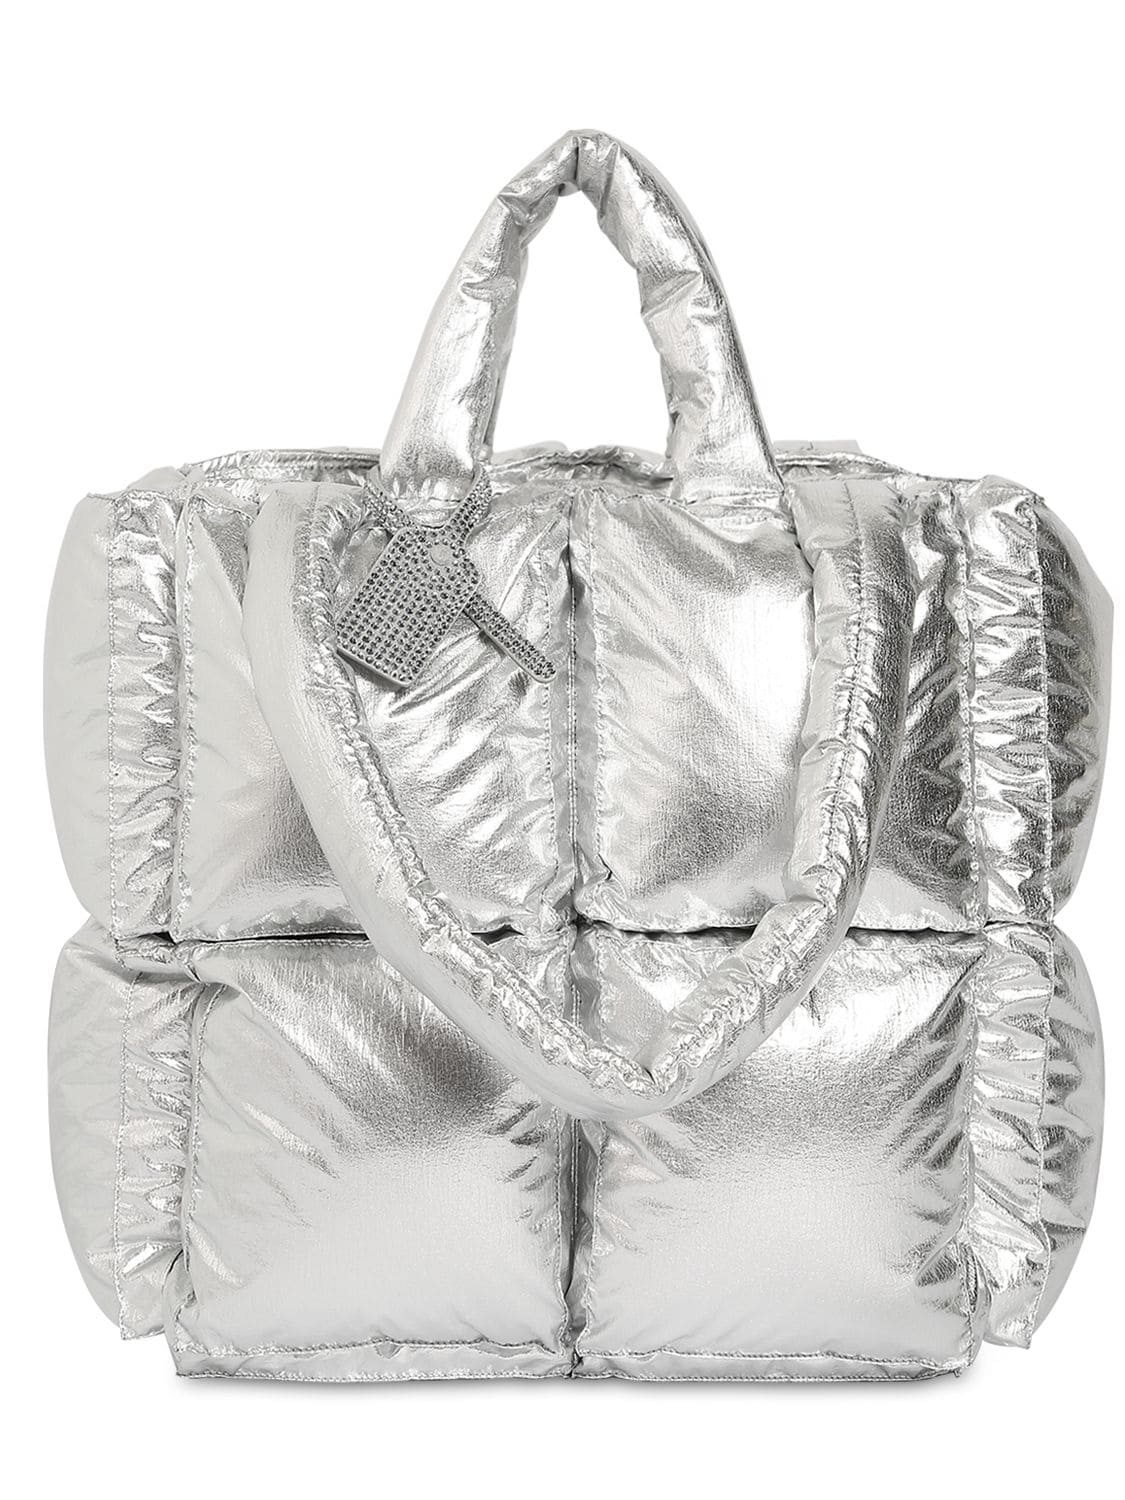 OFF-WHITE Puffy Bag Nylon Small Silver in Nylon with Gunmetal - US